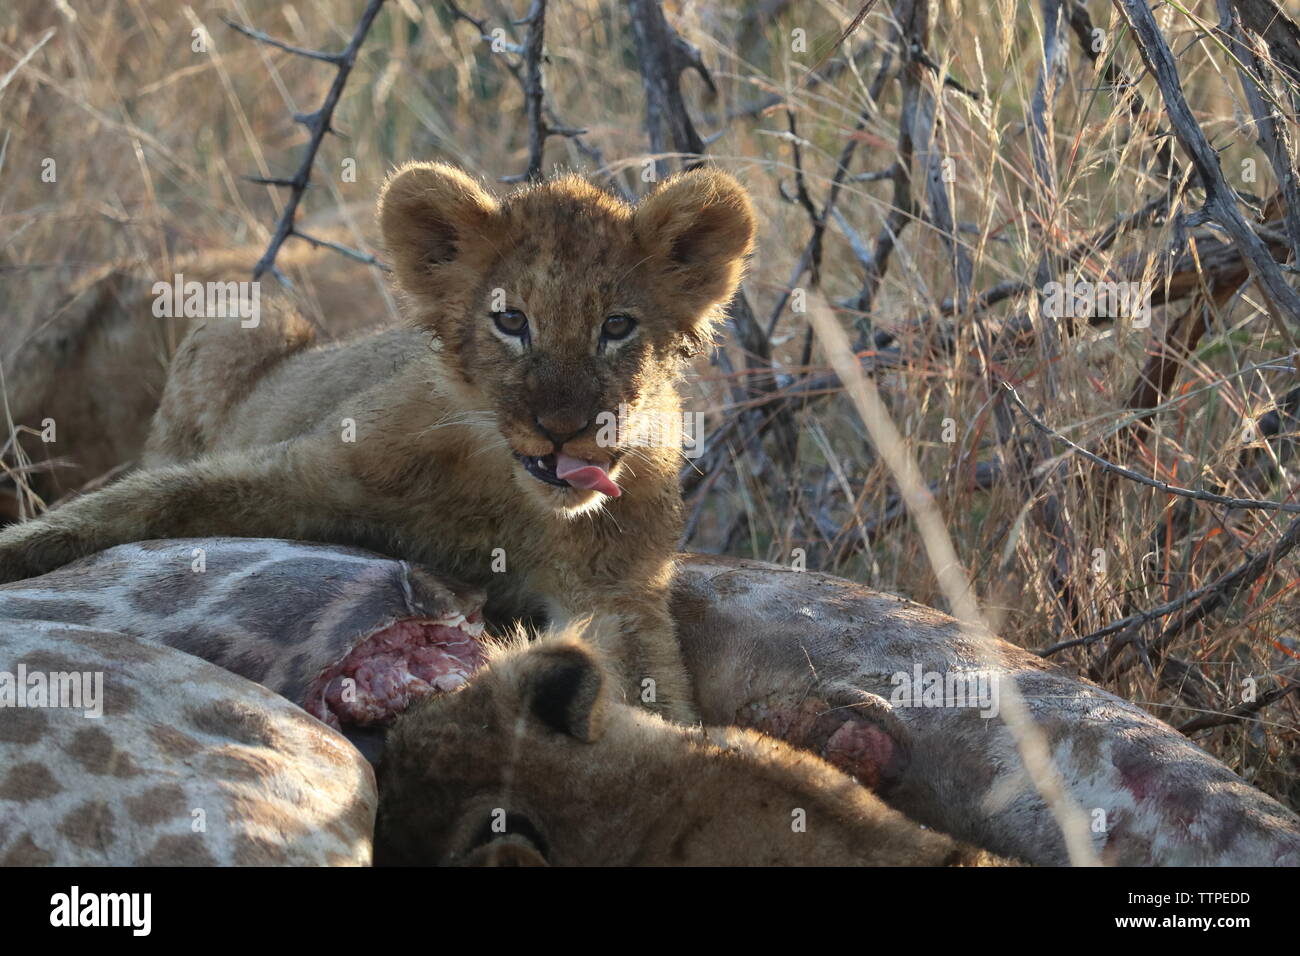 Lion cub licking lips while eating giraffe Stock Photo